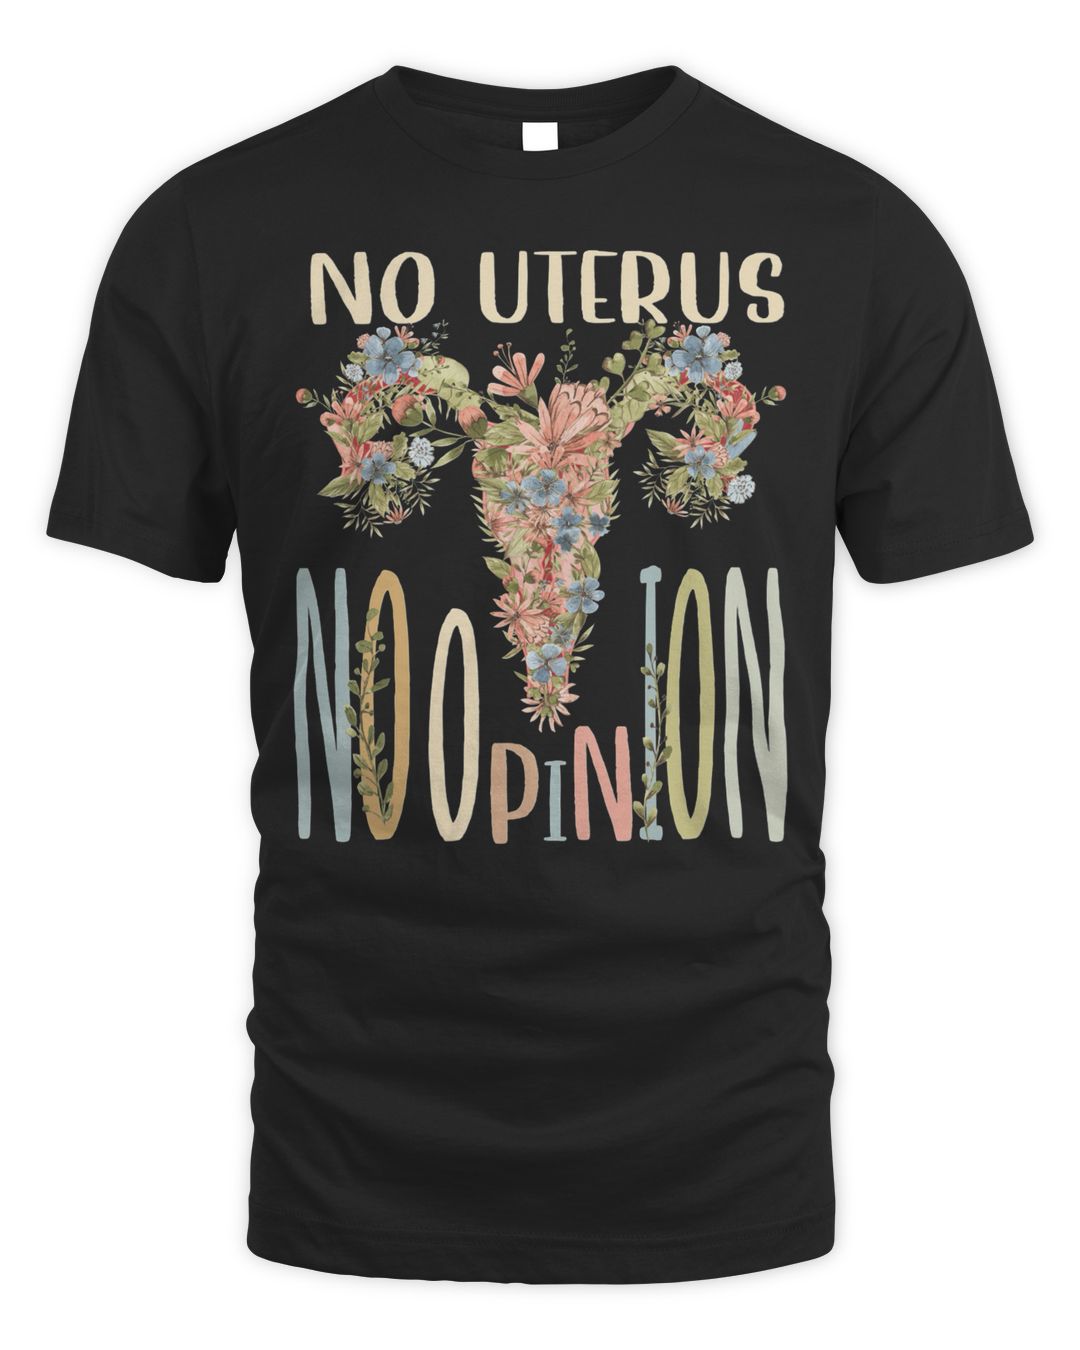 No Uterus No Opinion Floral Vintage Pro Choice Shirt